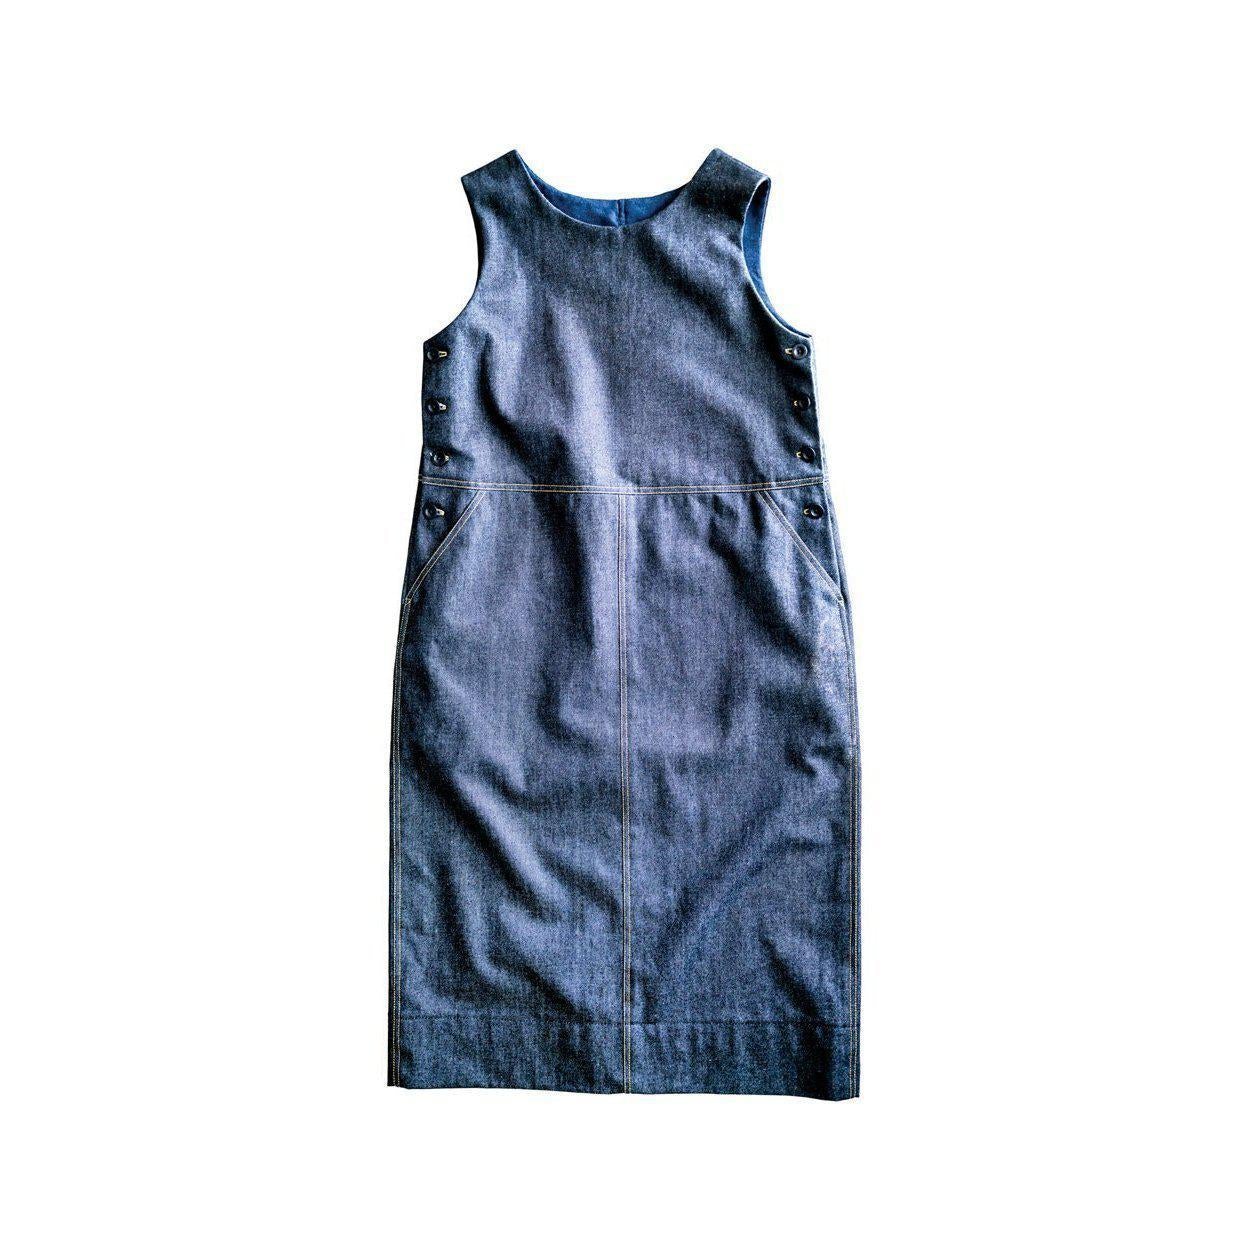 Merchant & Mills - Whittaker Dress Pattern - - gatherhereonline.com